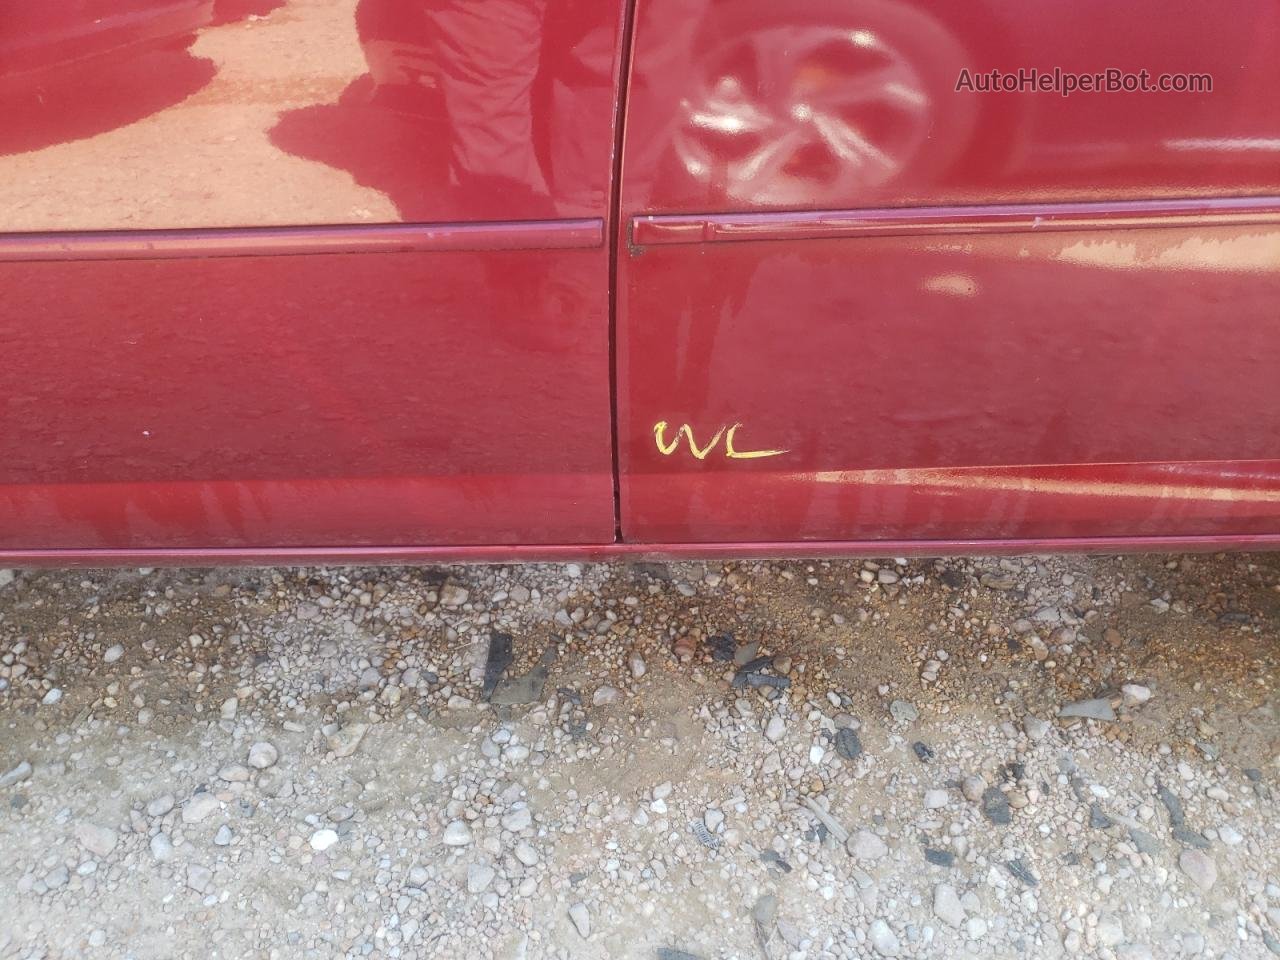 2008 Chevrolet Cobalt Lt Red vin: 1G1AL58FX87273279